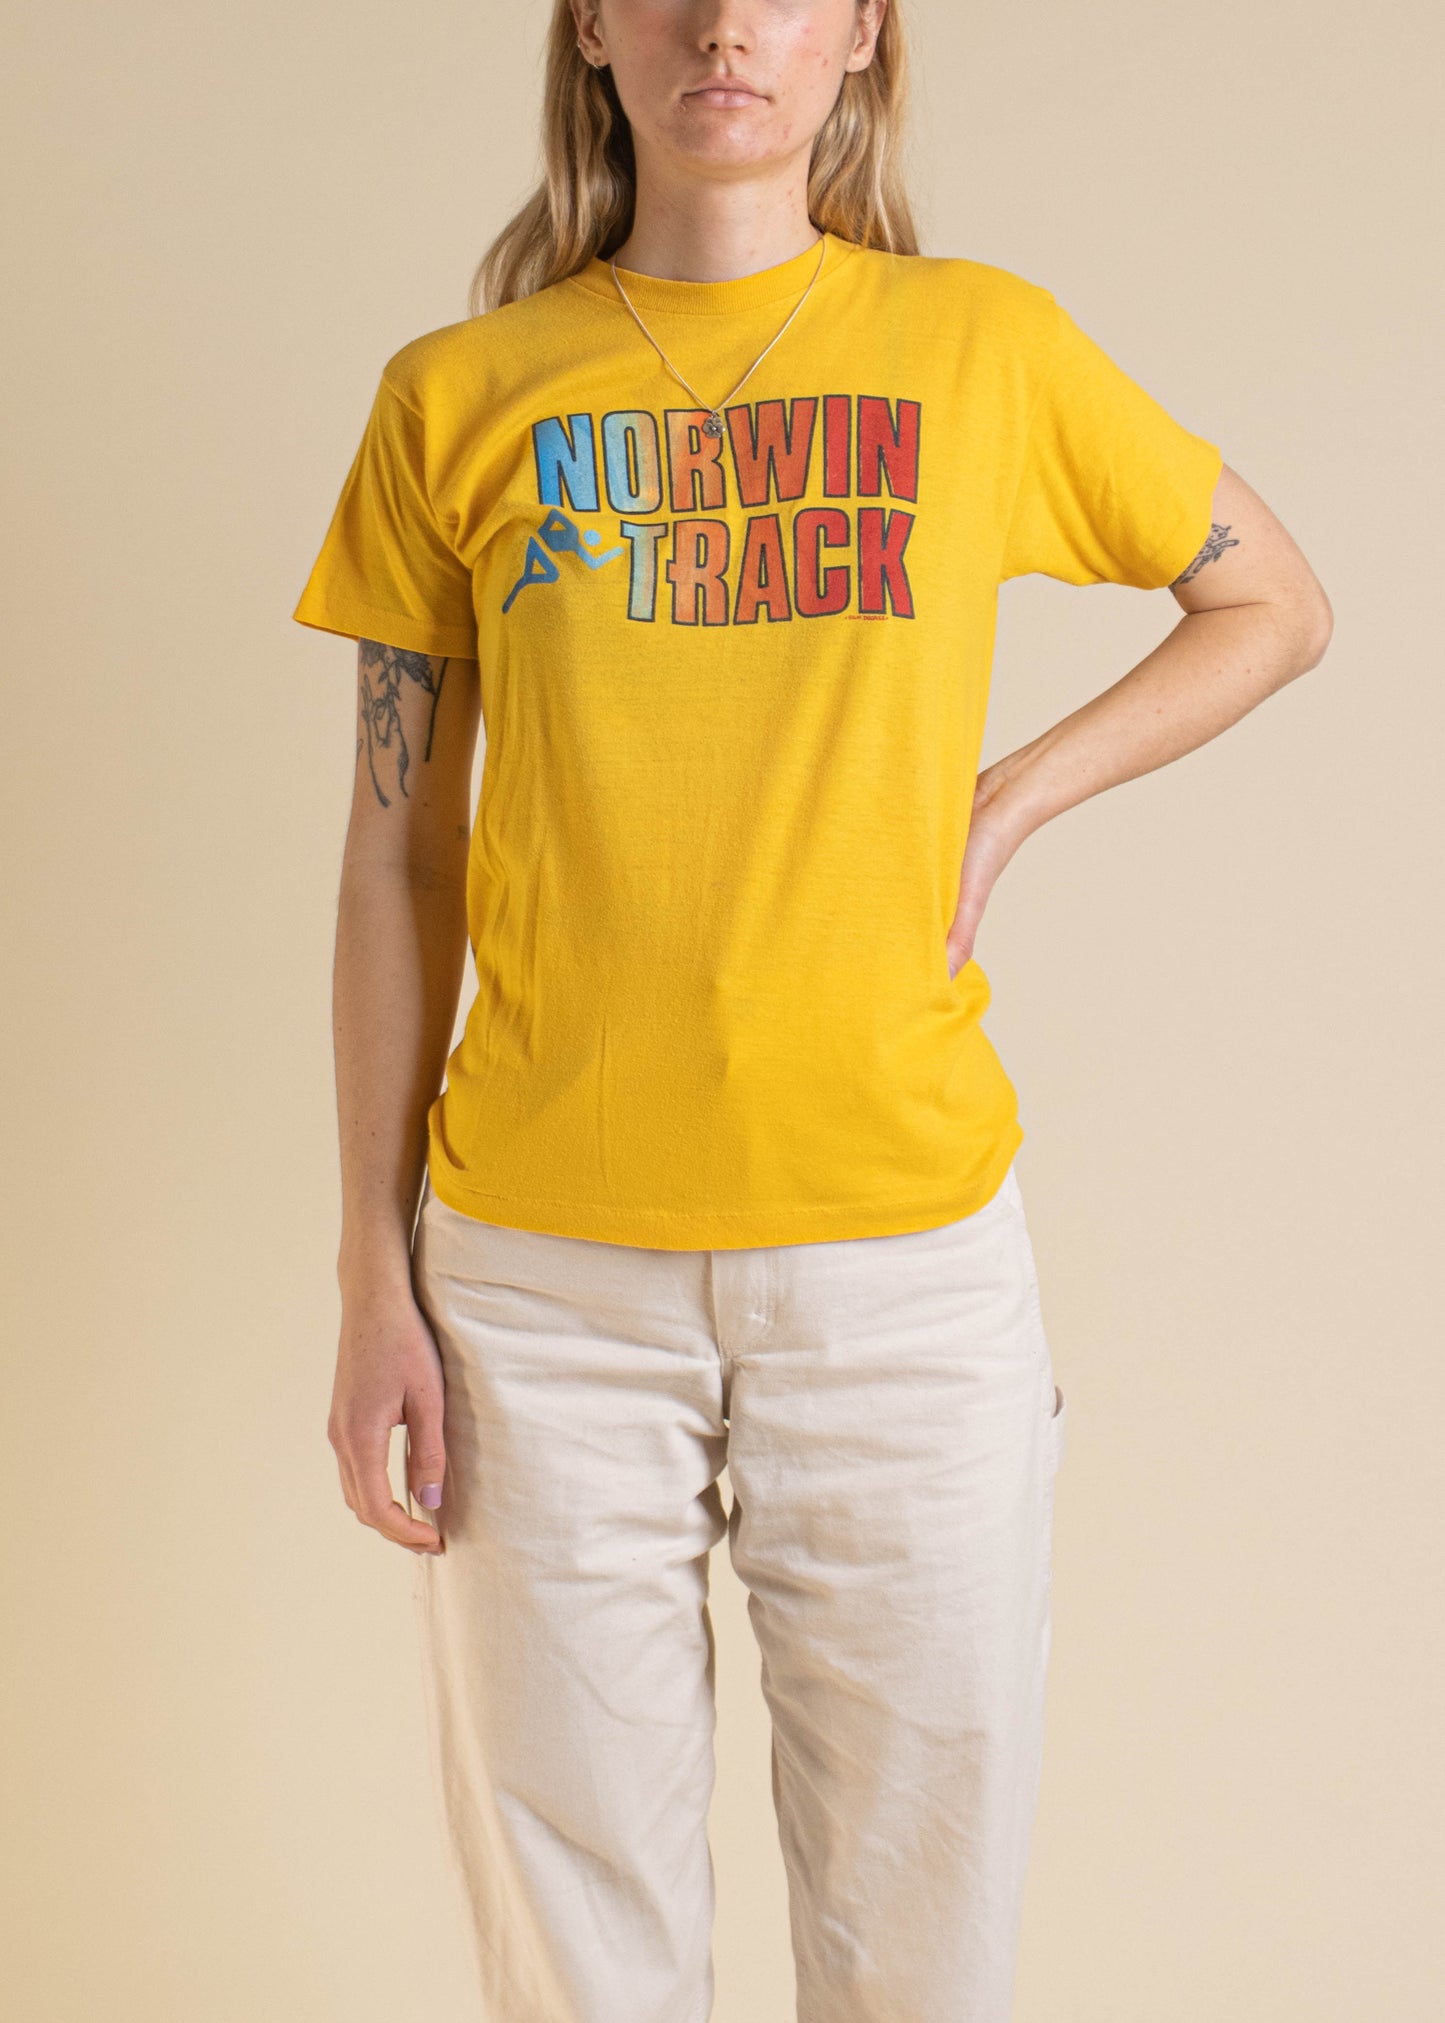 1980s Thunderbird Norwin Track T-Shirt Size XS/S